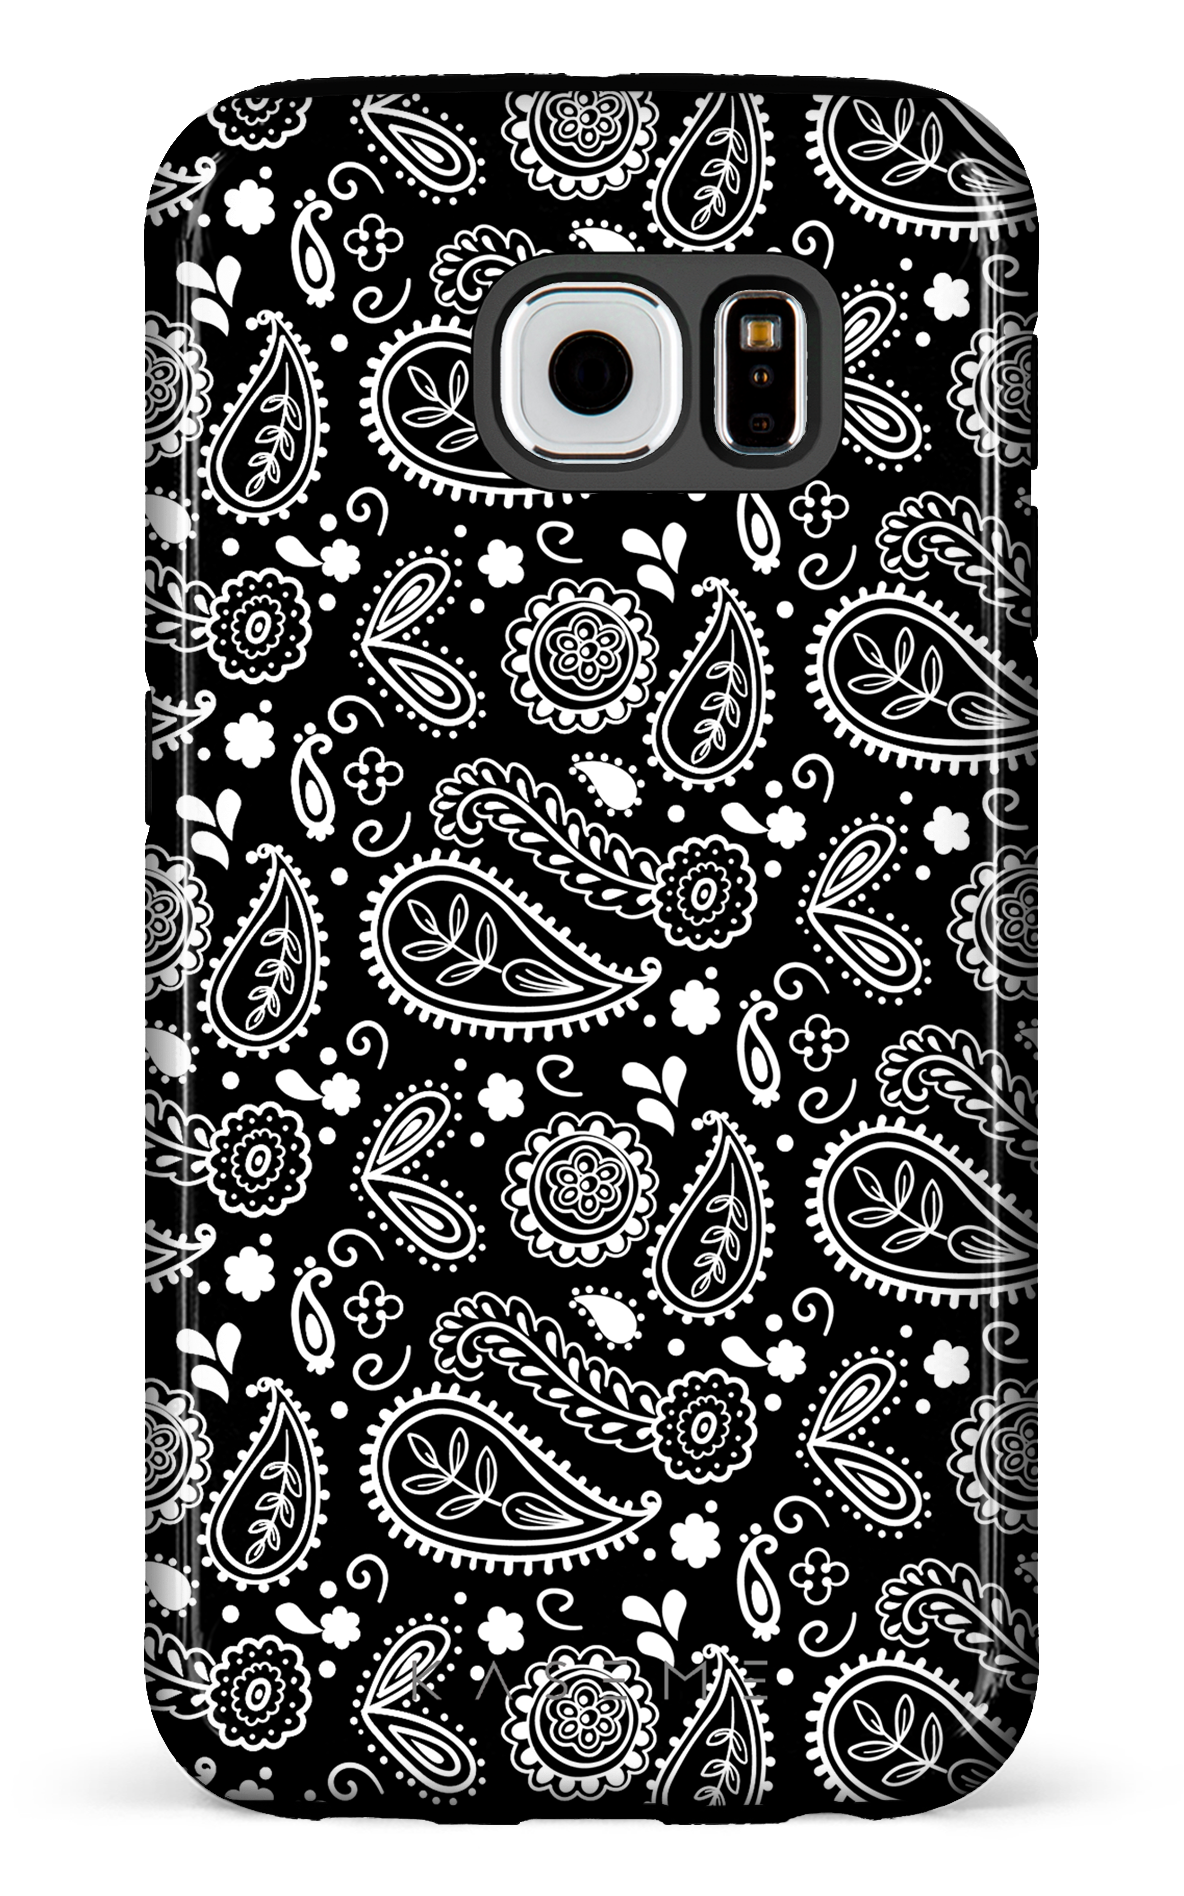 Paisley black - Galaxy S6